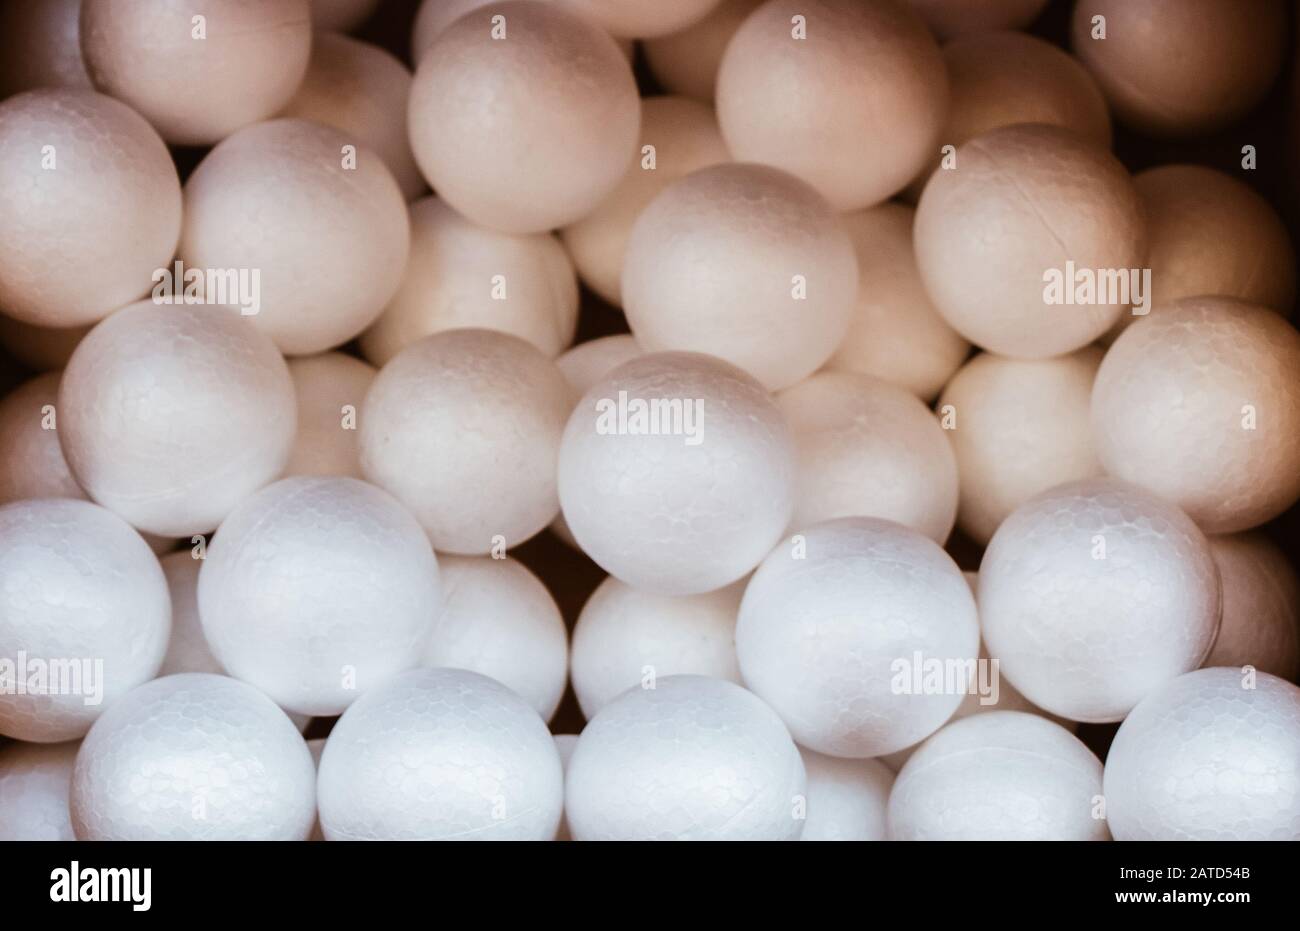 Dozens of styrofoam balls in the view Stock Photo